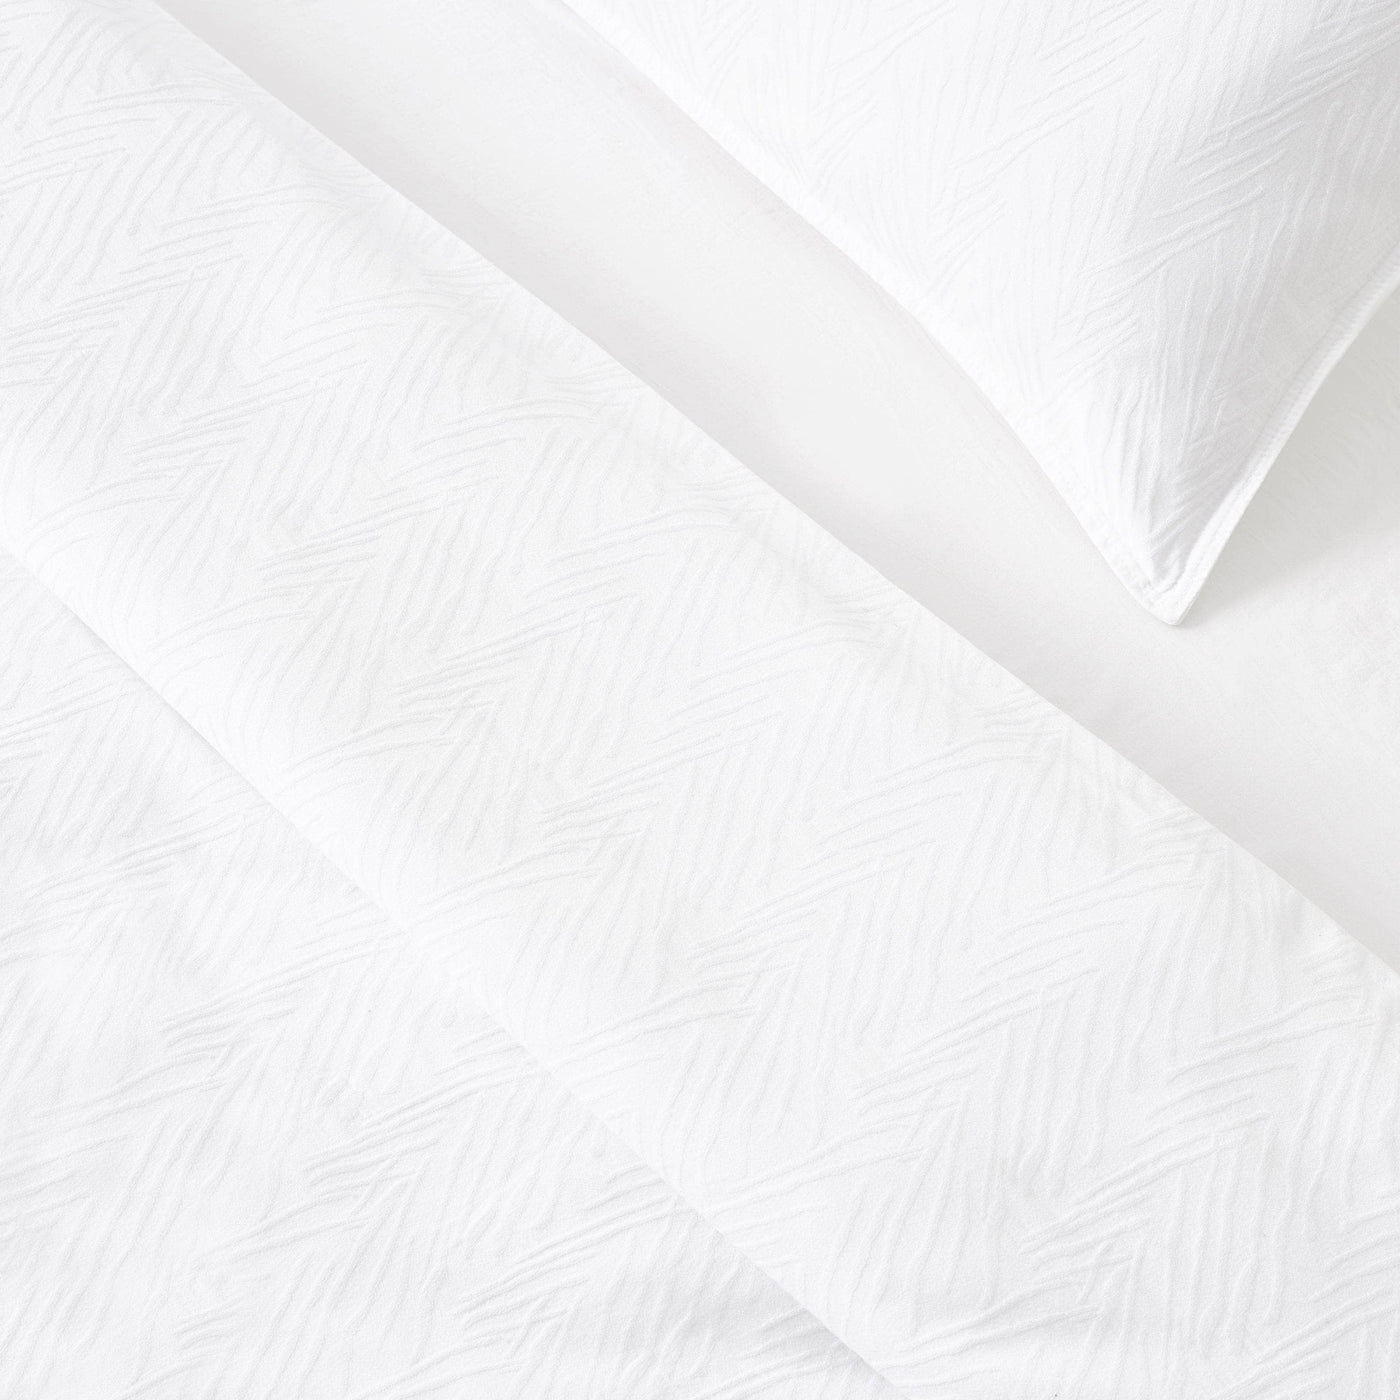 Freddie 100% Turkish Cotton Jacquard 300 TC Duvet Cover Set, White, Super King Size Bedding Sets sazy.com